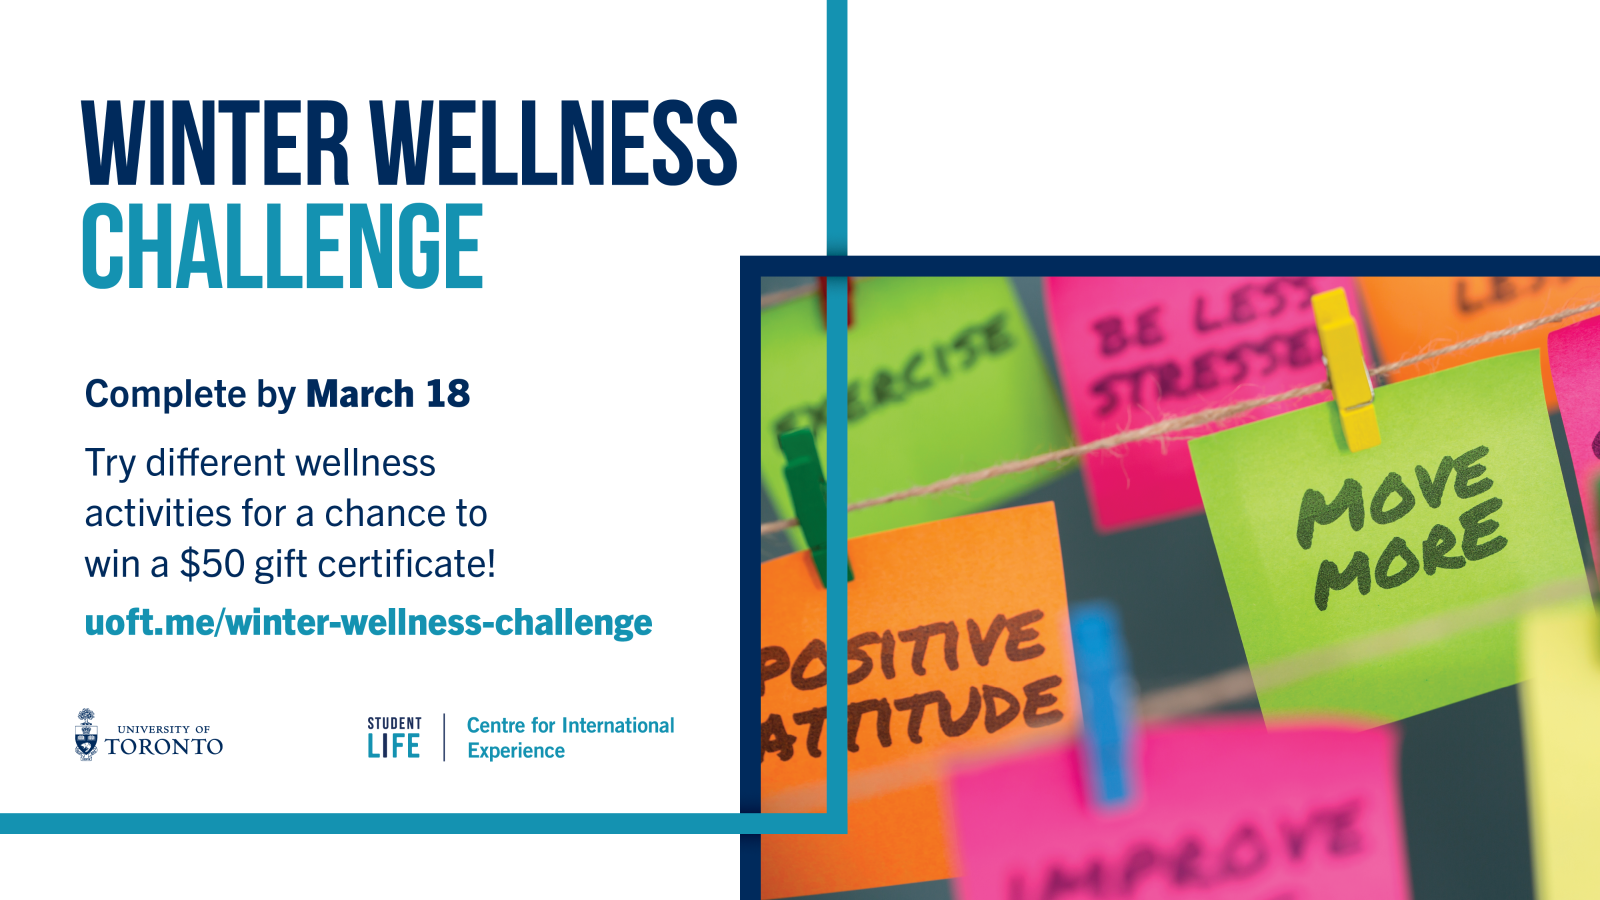 Winter Wellness Challenge promotion flyer